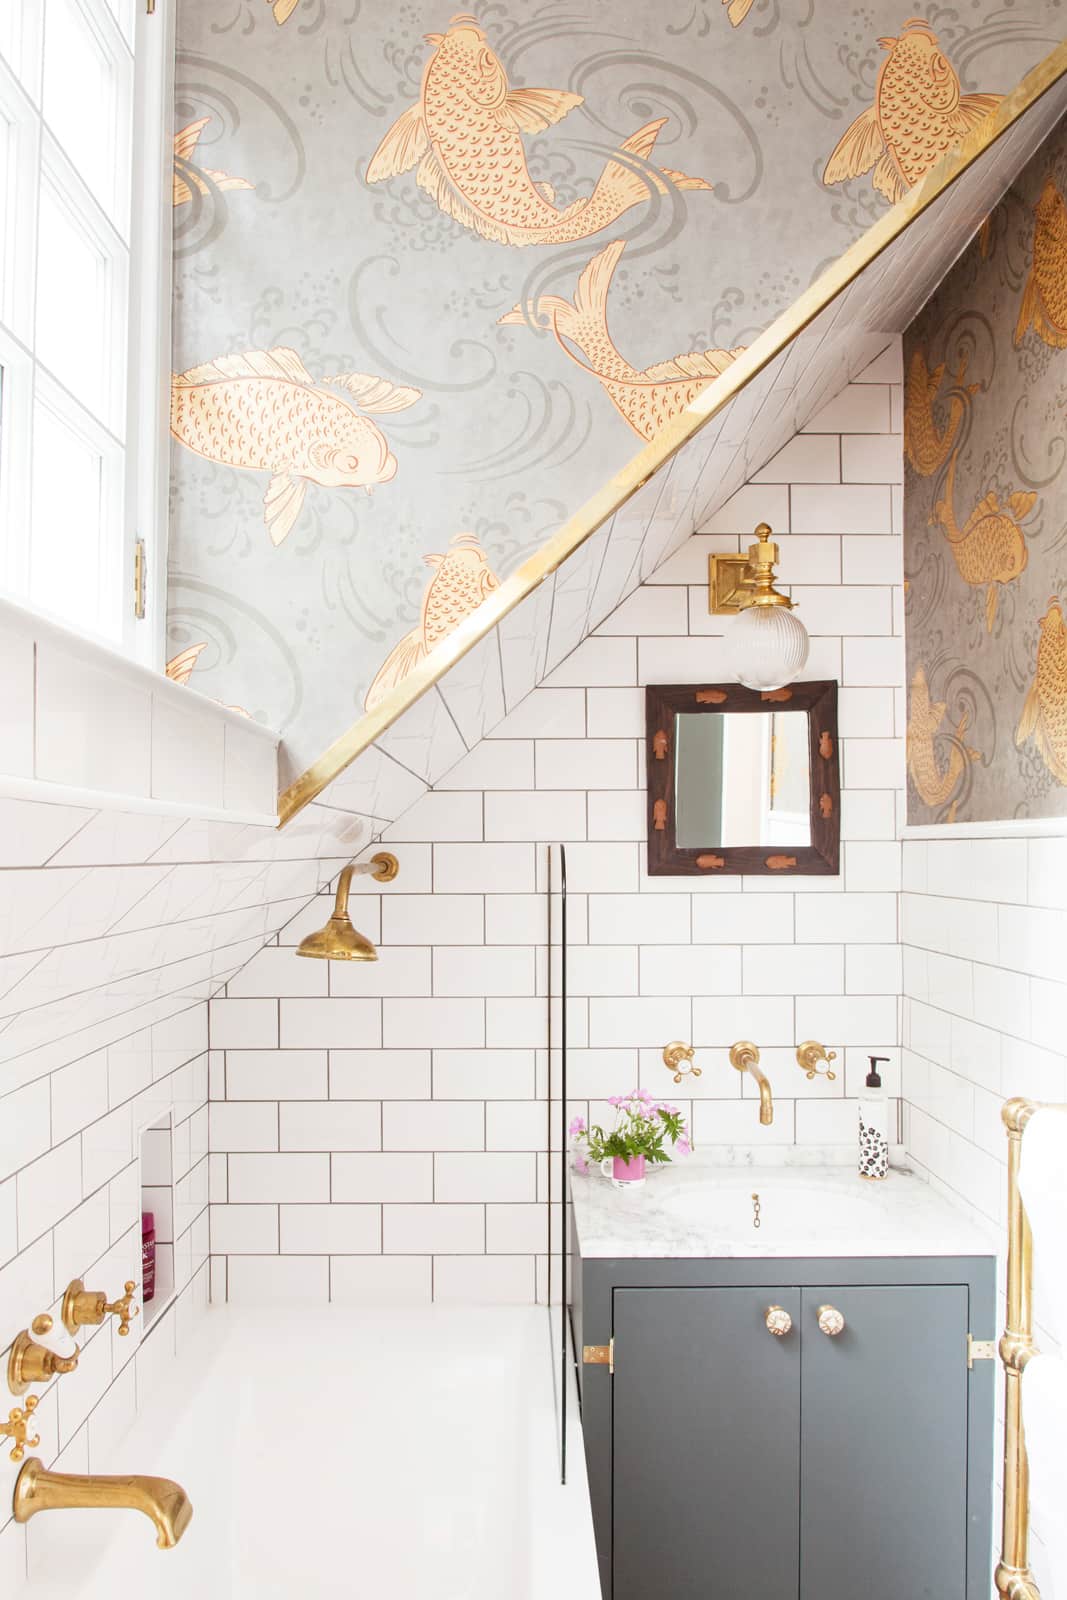 Wall Tiles For Small Bathroom